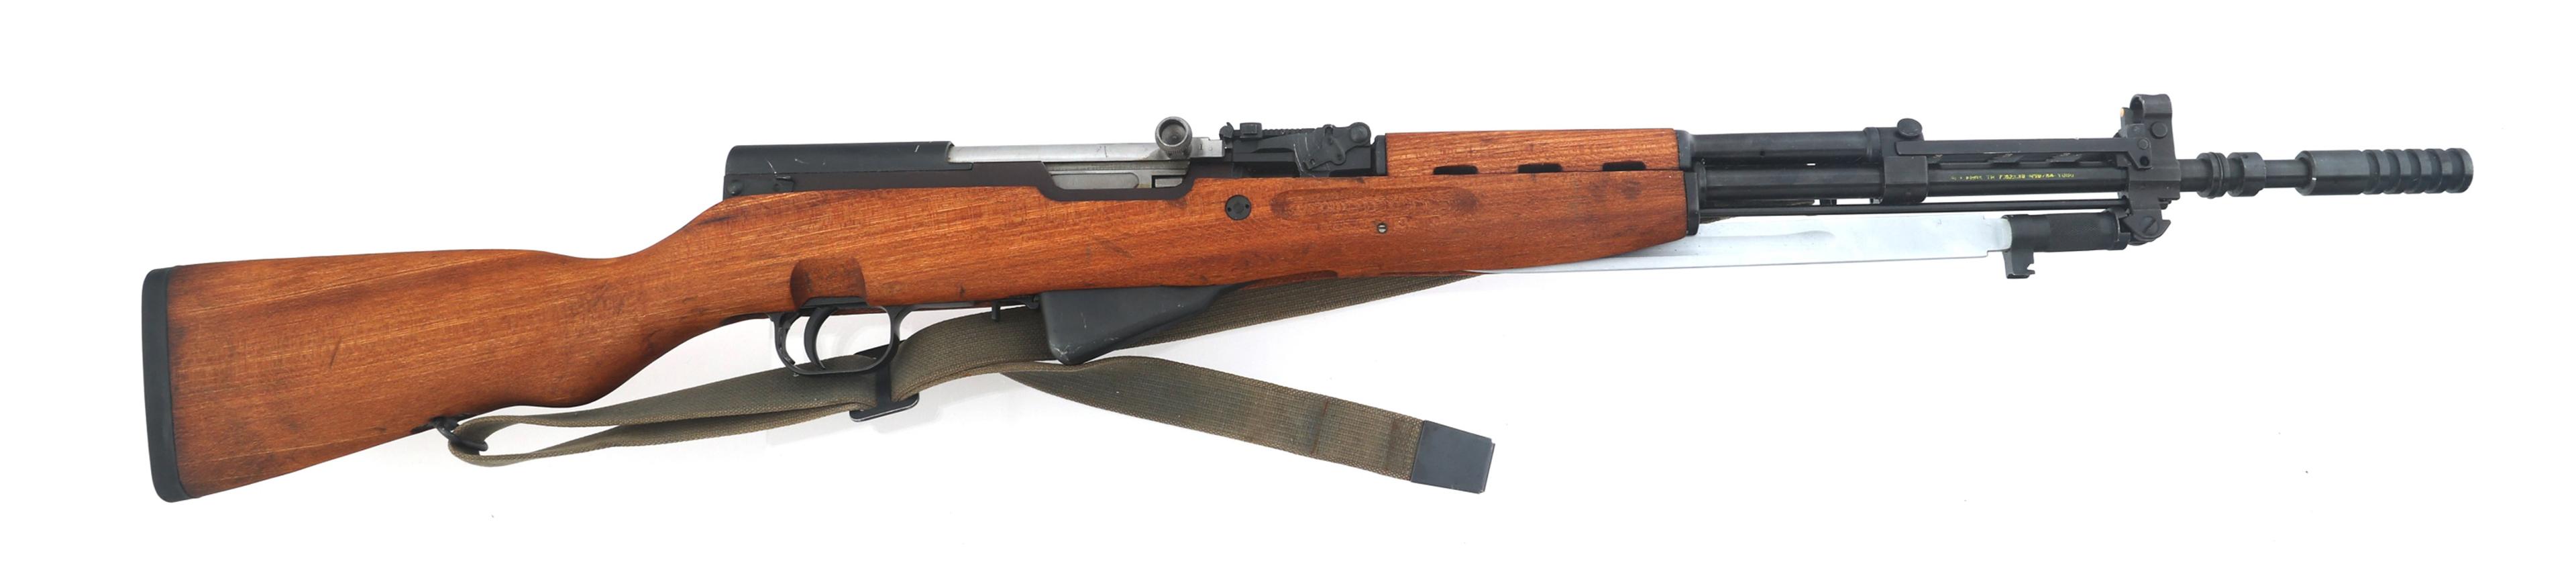 YUGOSLAVIAN ZASTAVA MODEL 59/66 A1 7.62x39mm RIFLE